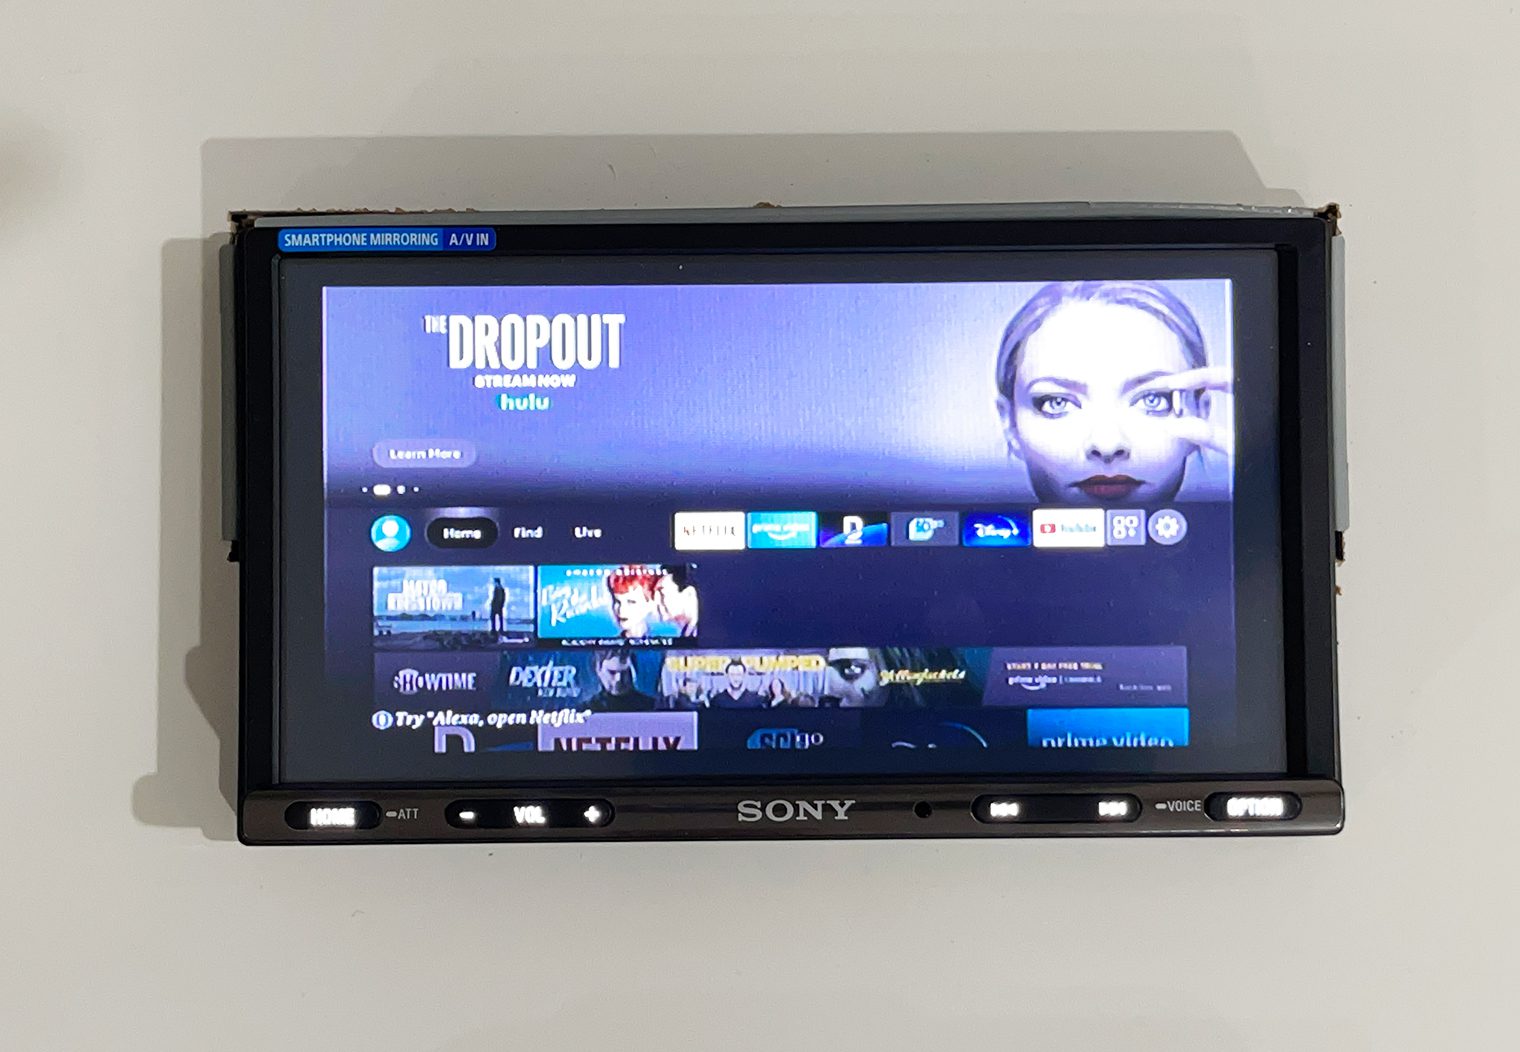 Sony XAV-AX3200 firetv home